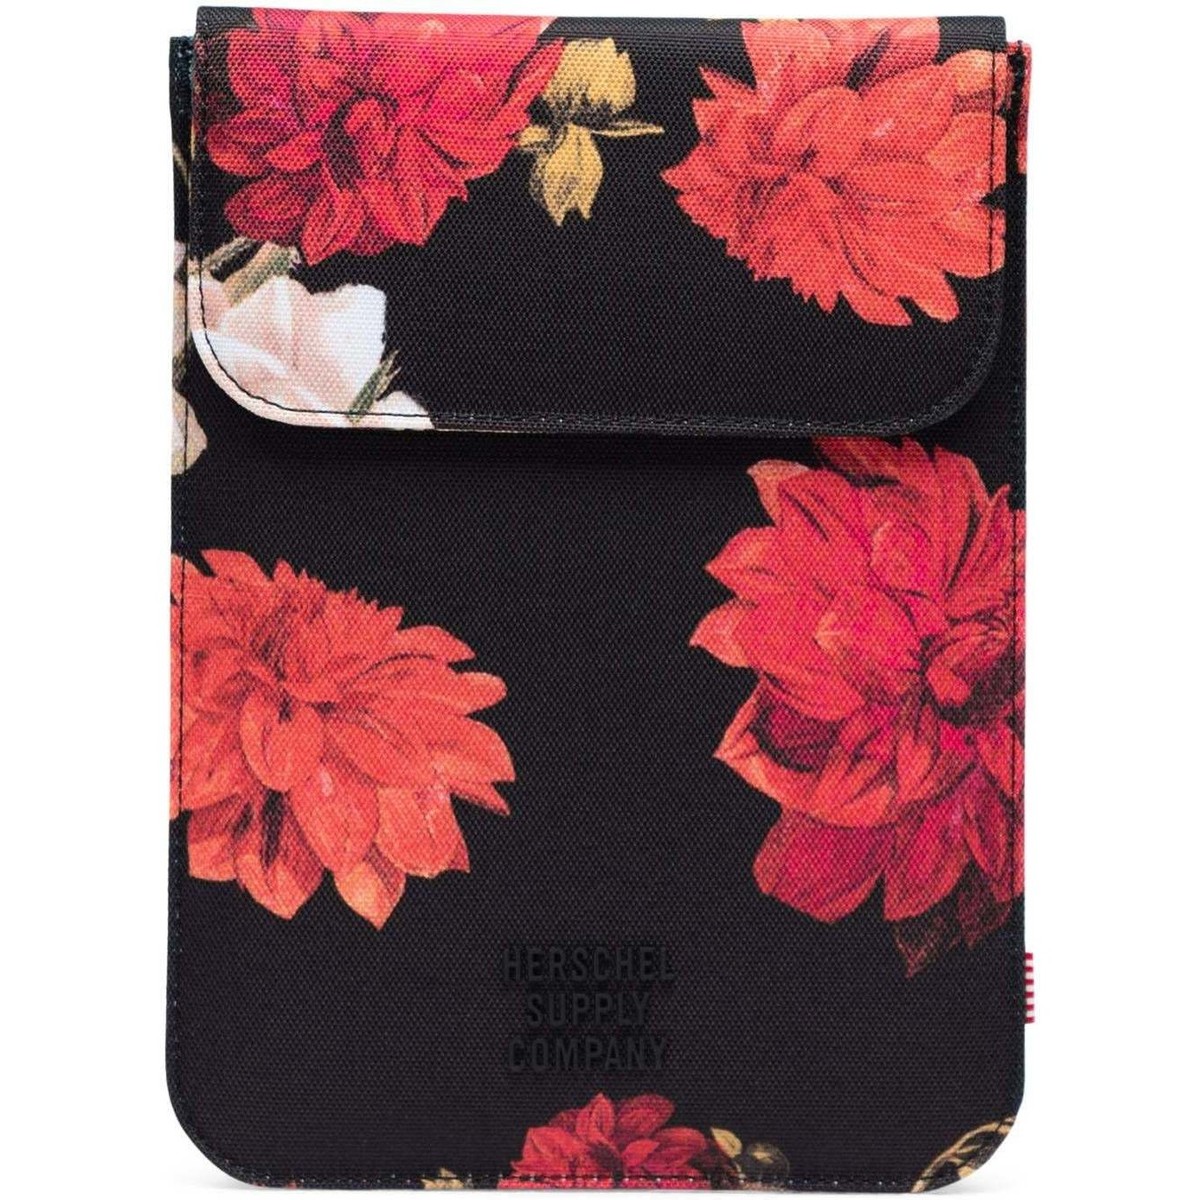 Herschel Noir Spokane Sleeve for iPad Mini Vintage Floral Black gzrAsl7x